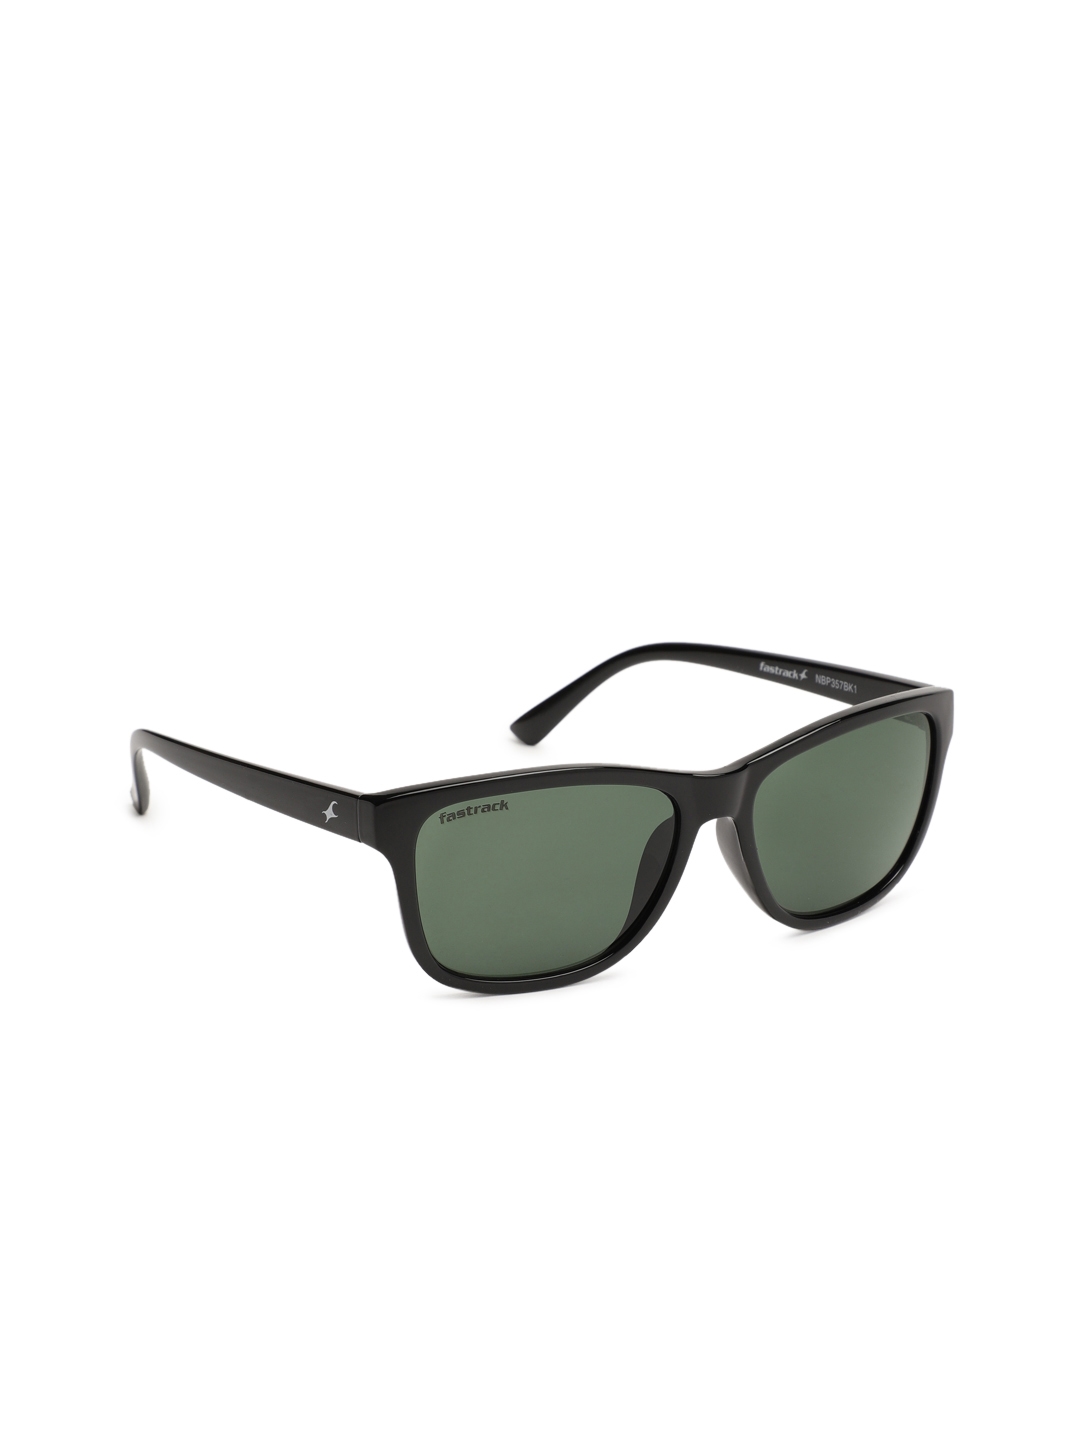 Wayfarer Rimmed Sunglasses Fastrack - C087BK3 at best price | Titan Eye+-nextbuild.com.vn